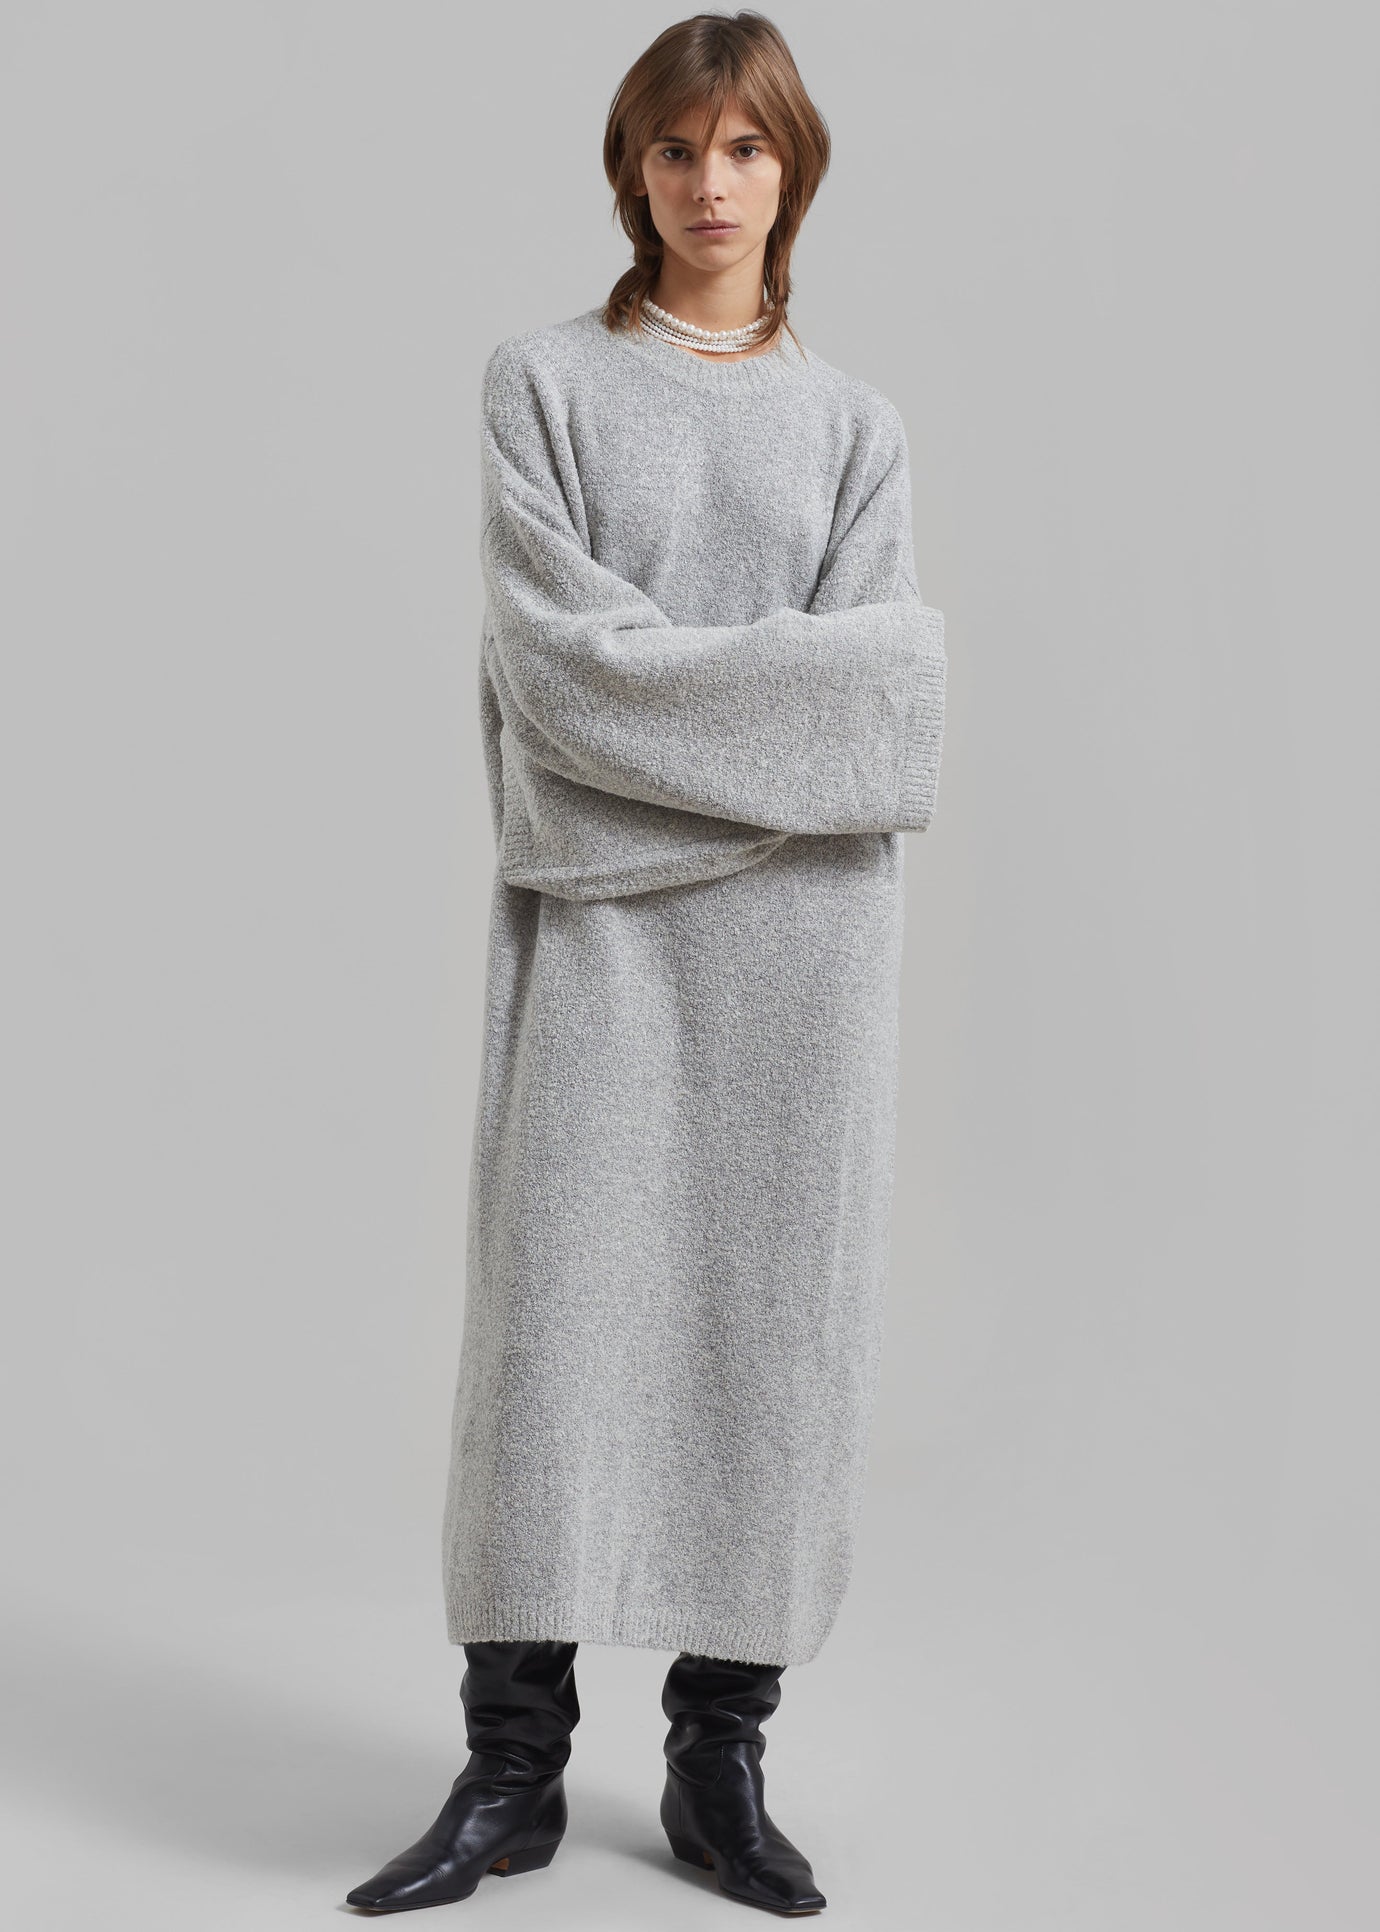 Alba Long Hooded Dress - Grey - 1